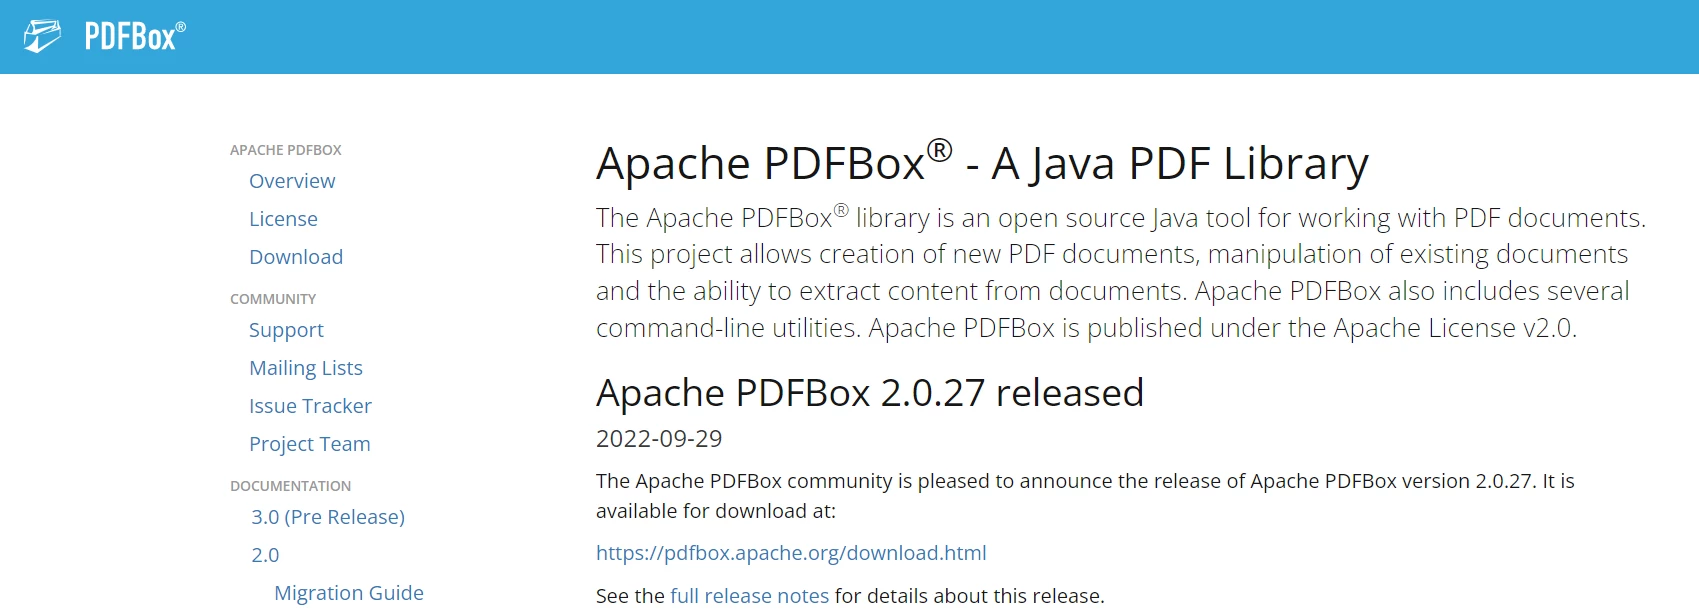 Java PDF Library Comparison - Figure 4: Aspose.PDF